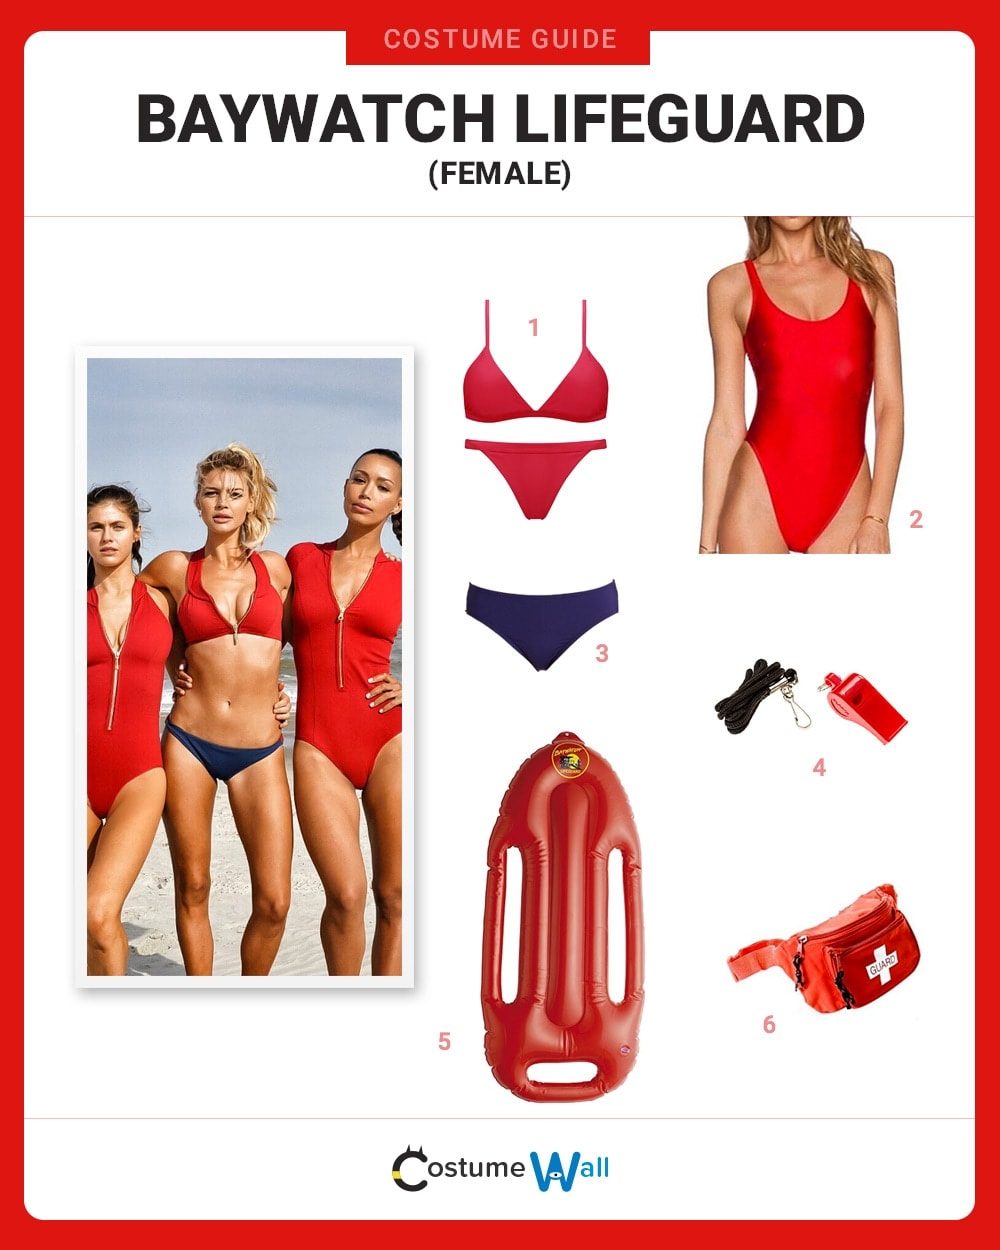 Baywatch Lifeguard (Female) Costume Guide